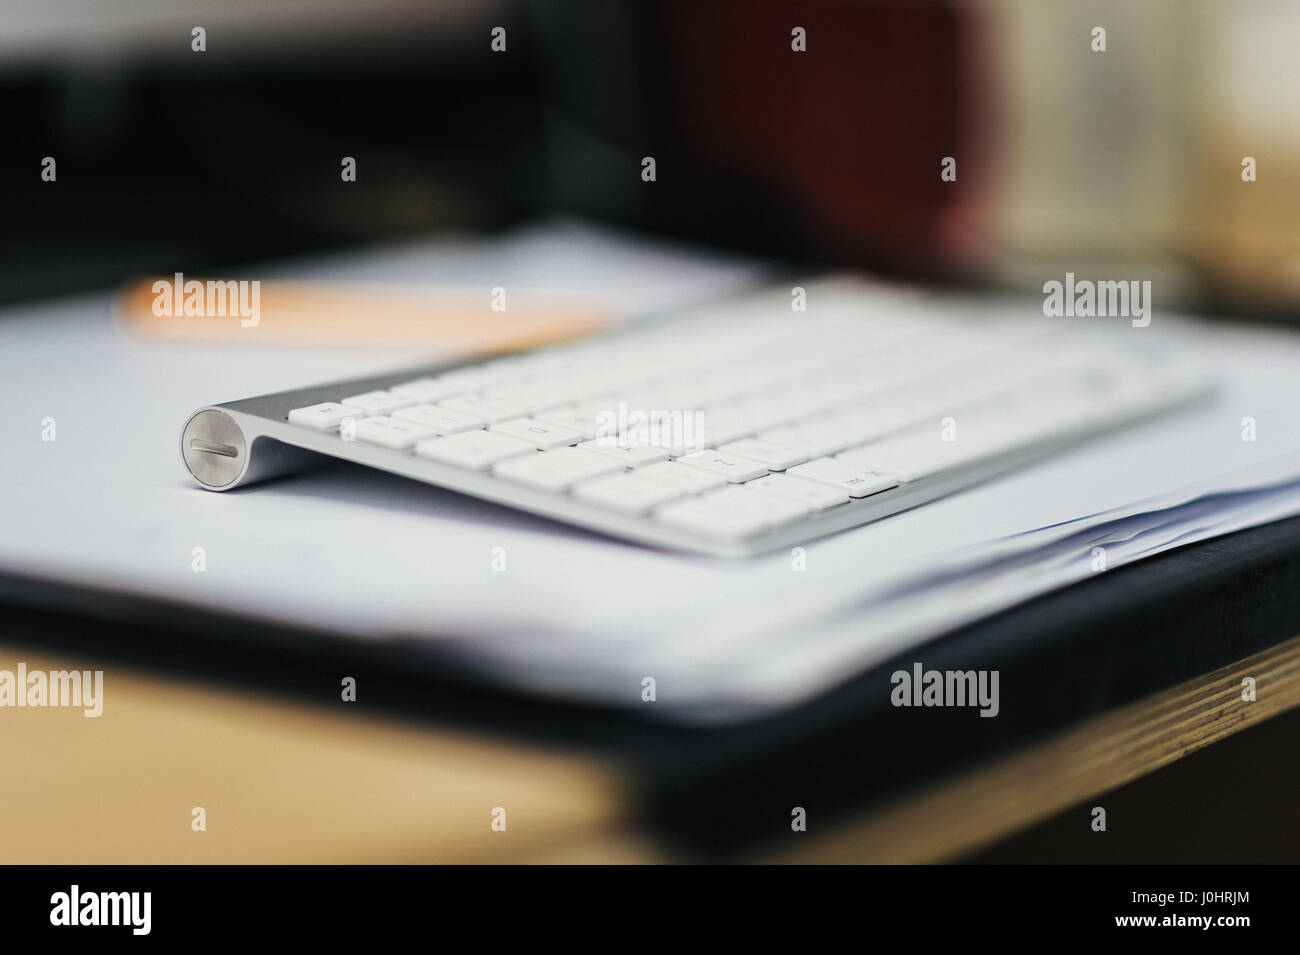 Photo of a Wireless Apple Keyboard Stock Photo